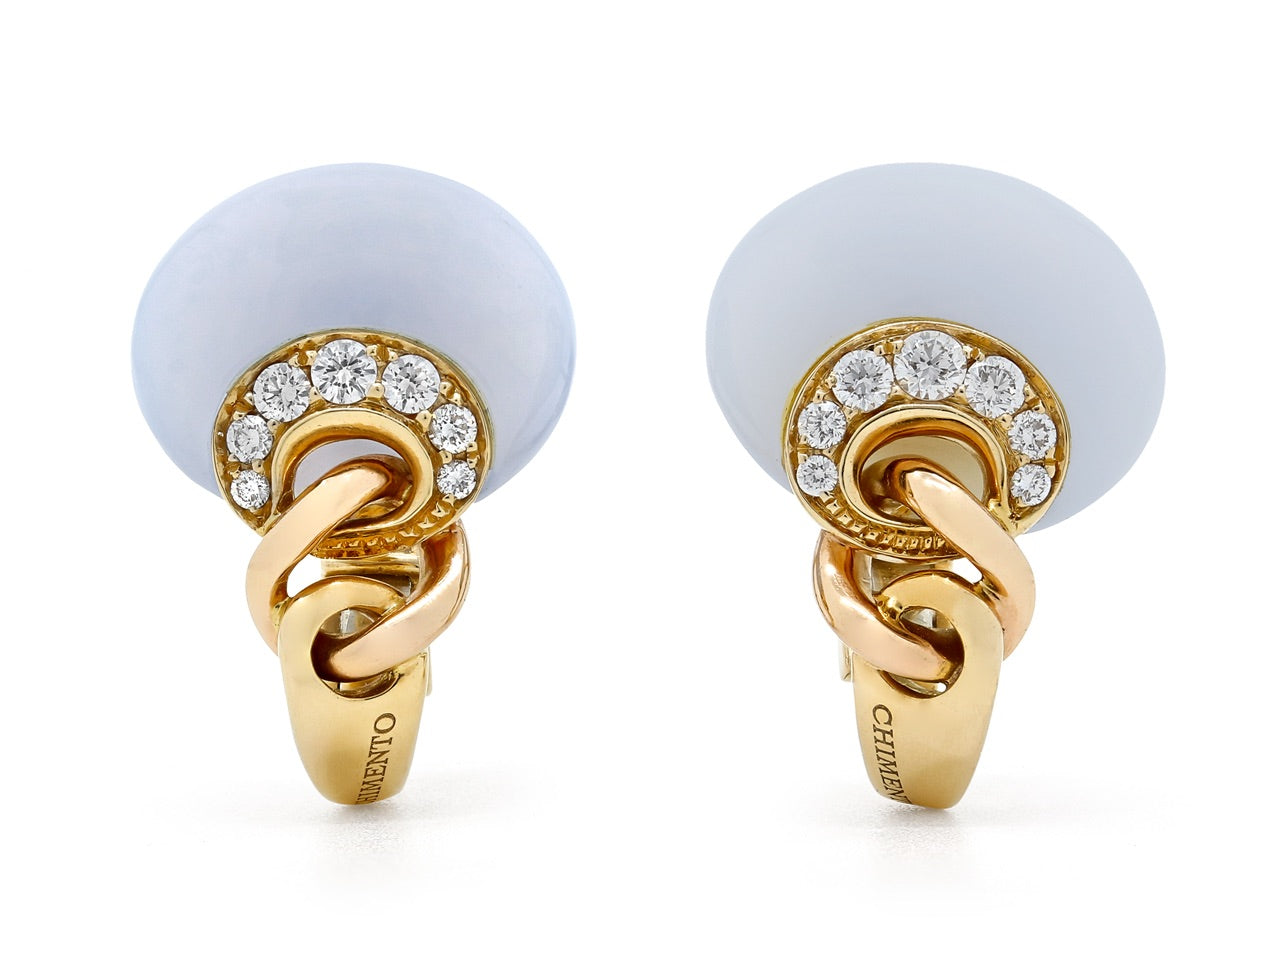 Chimento Chalcedony Earrings in 18K Yellow Gold